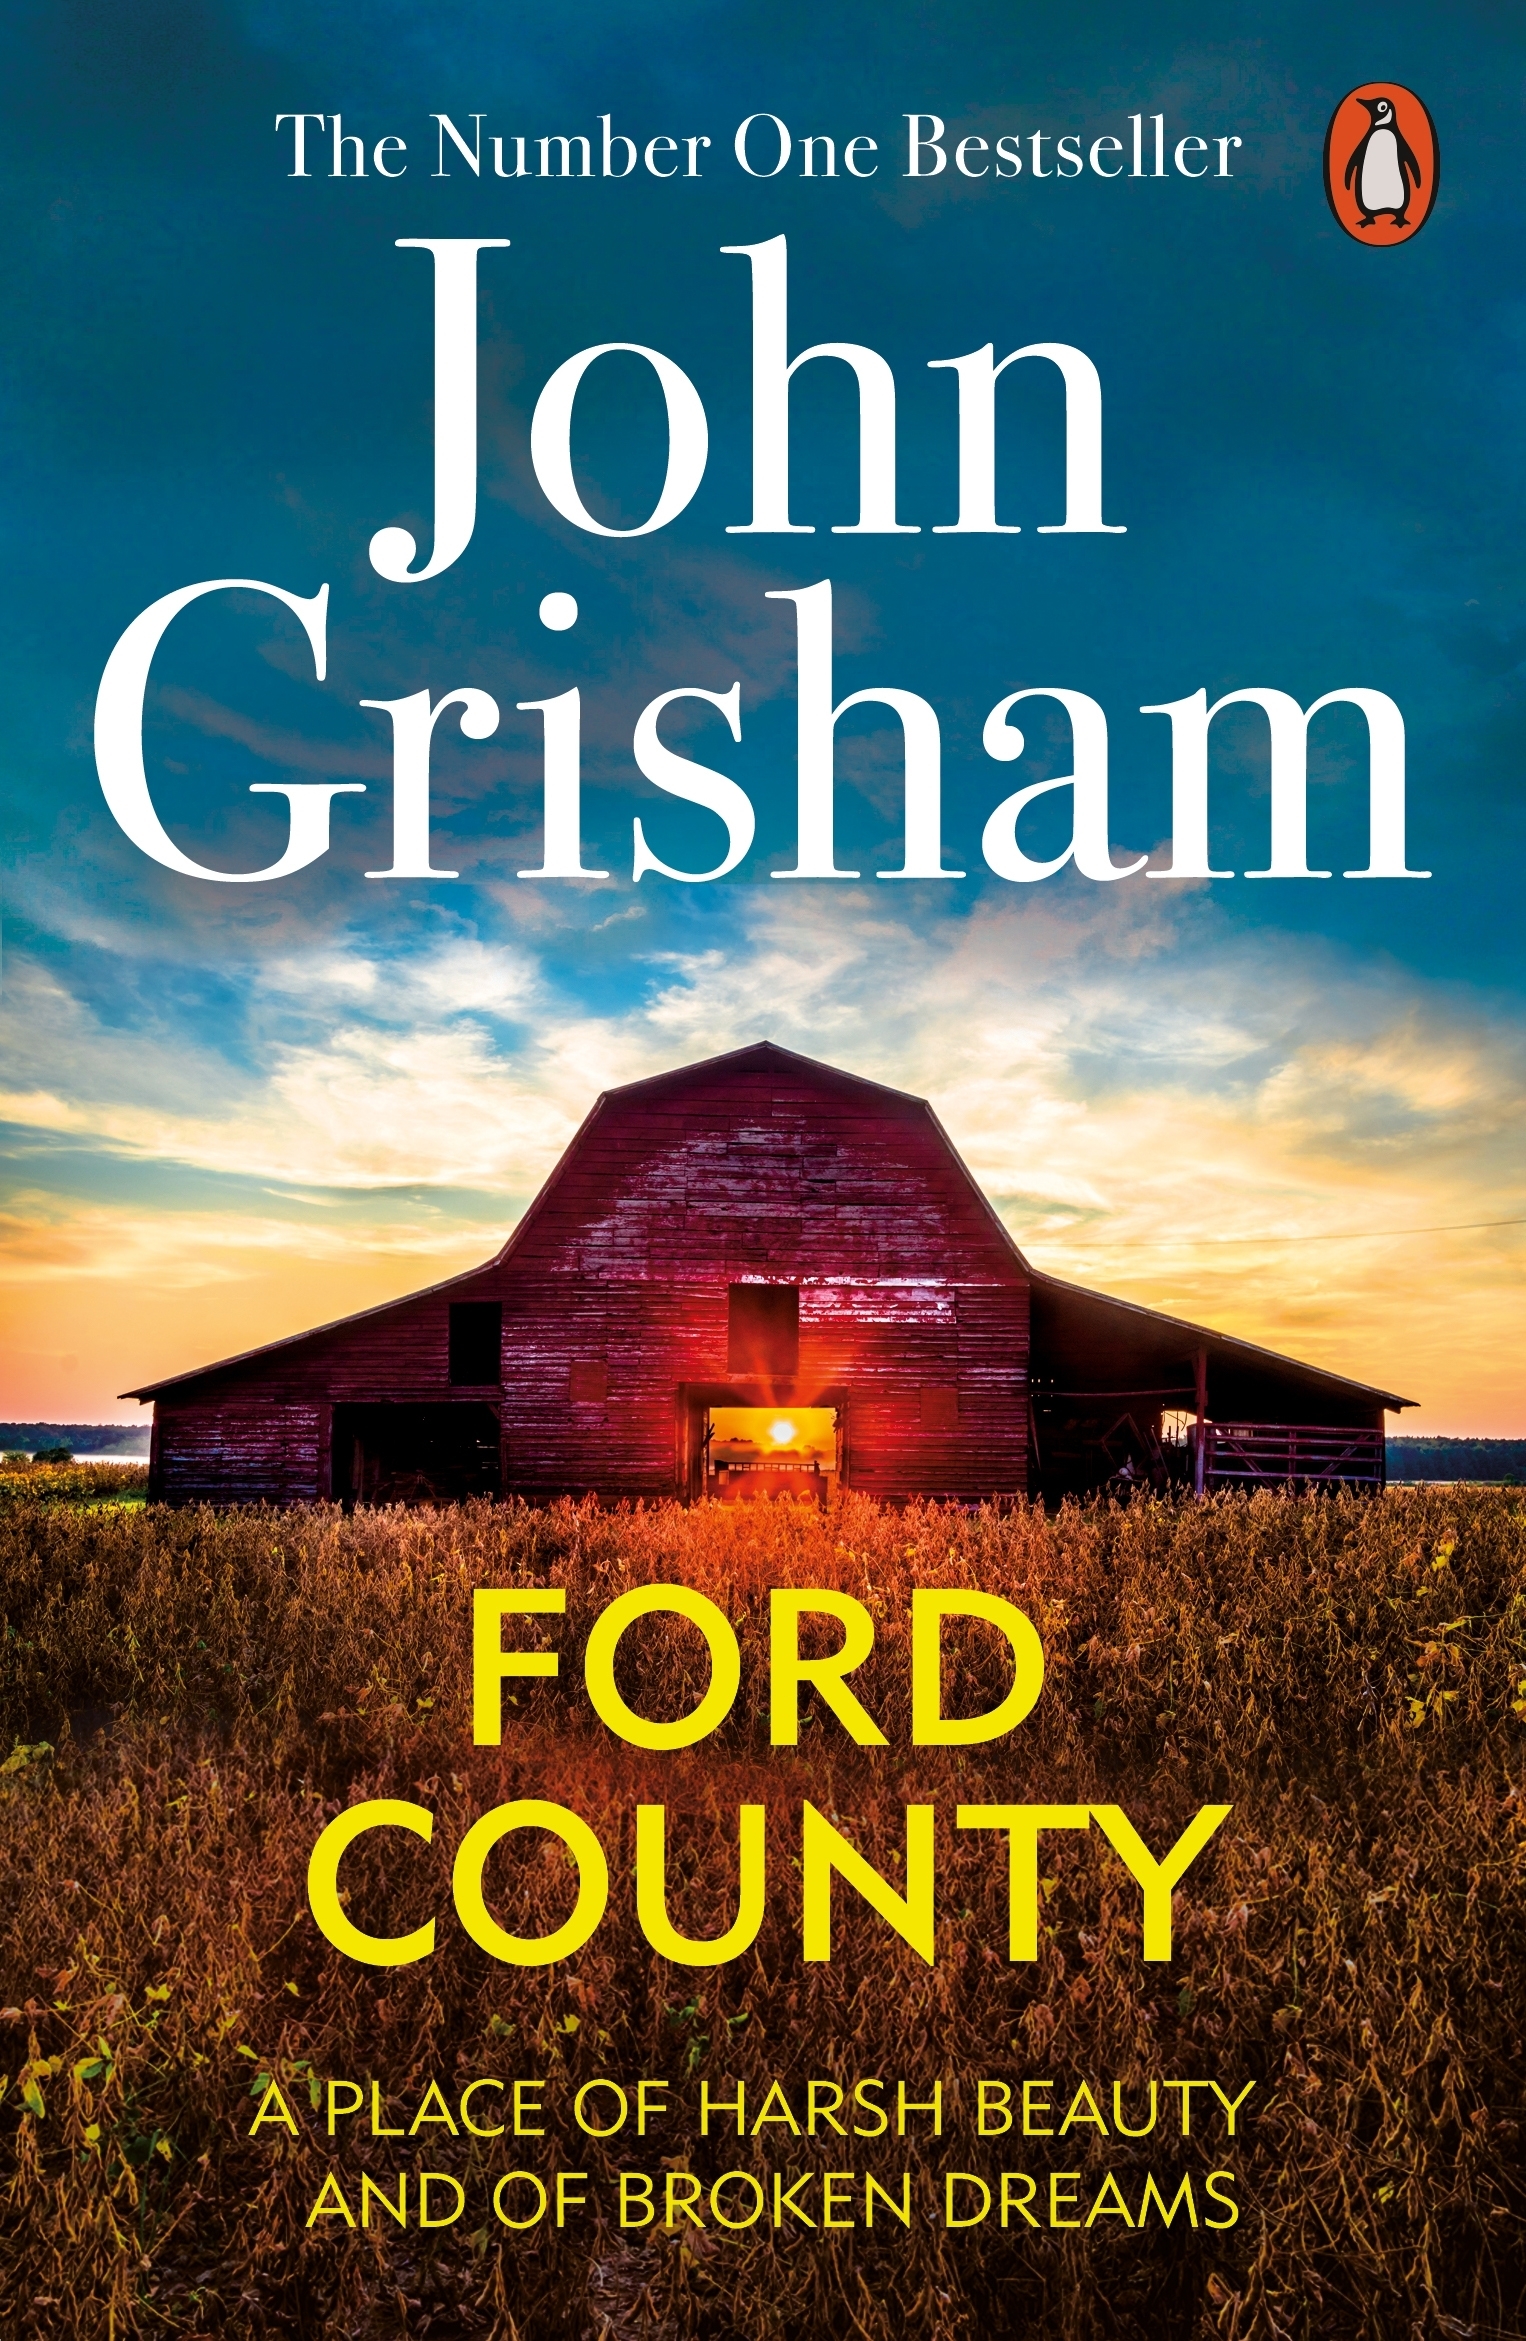 Ford County by John Grisham - Penguin Books Australia